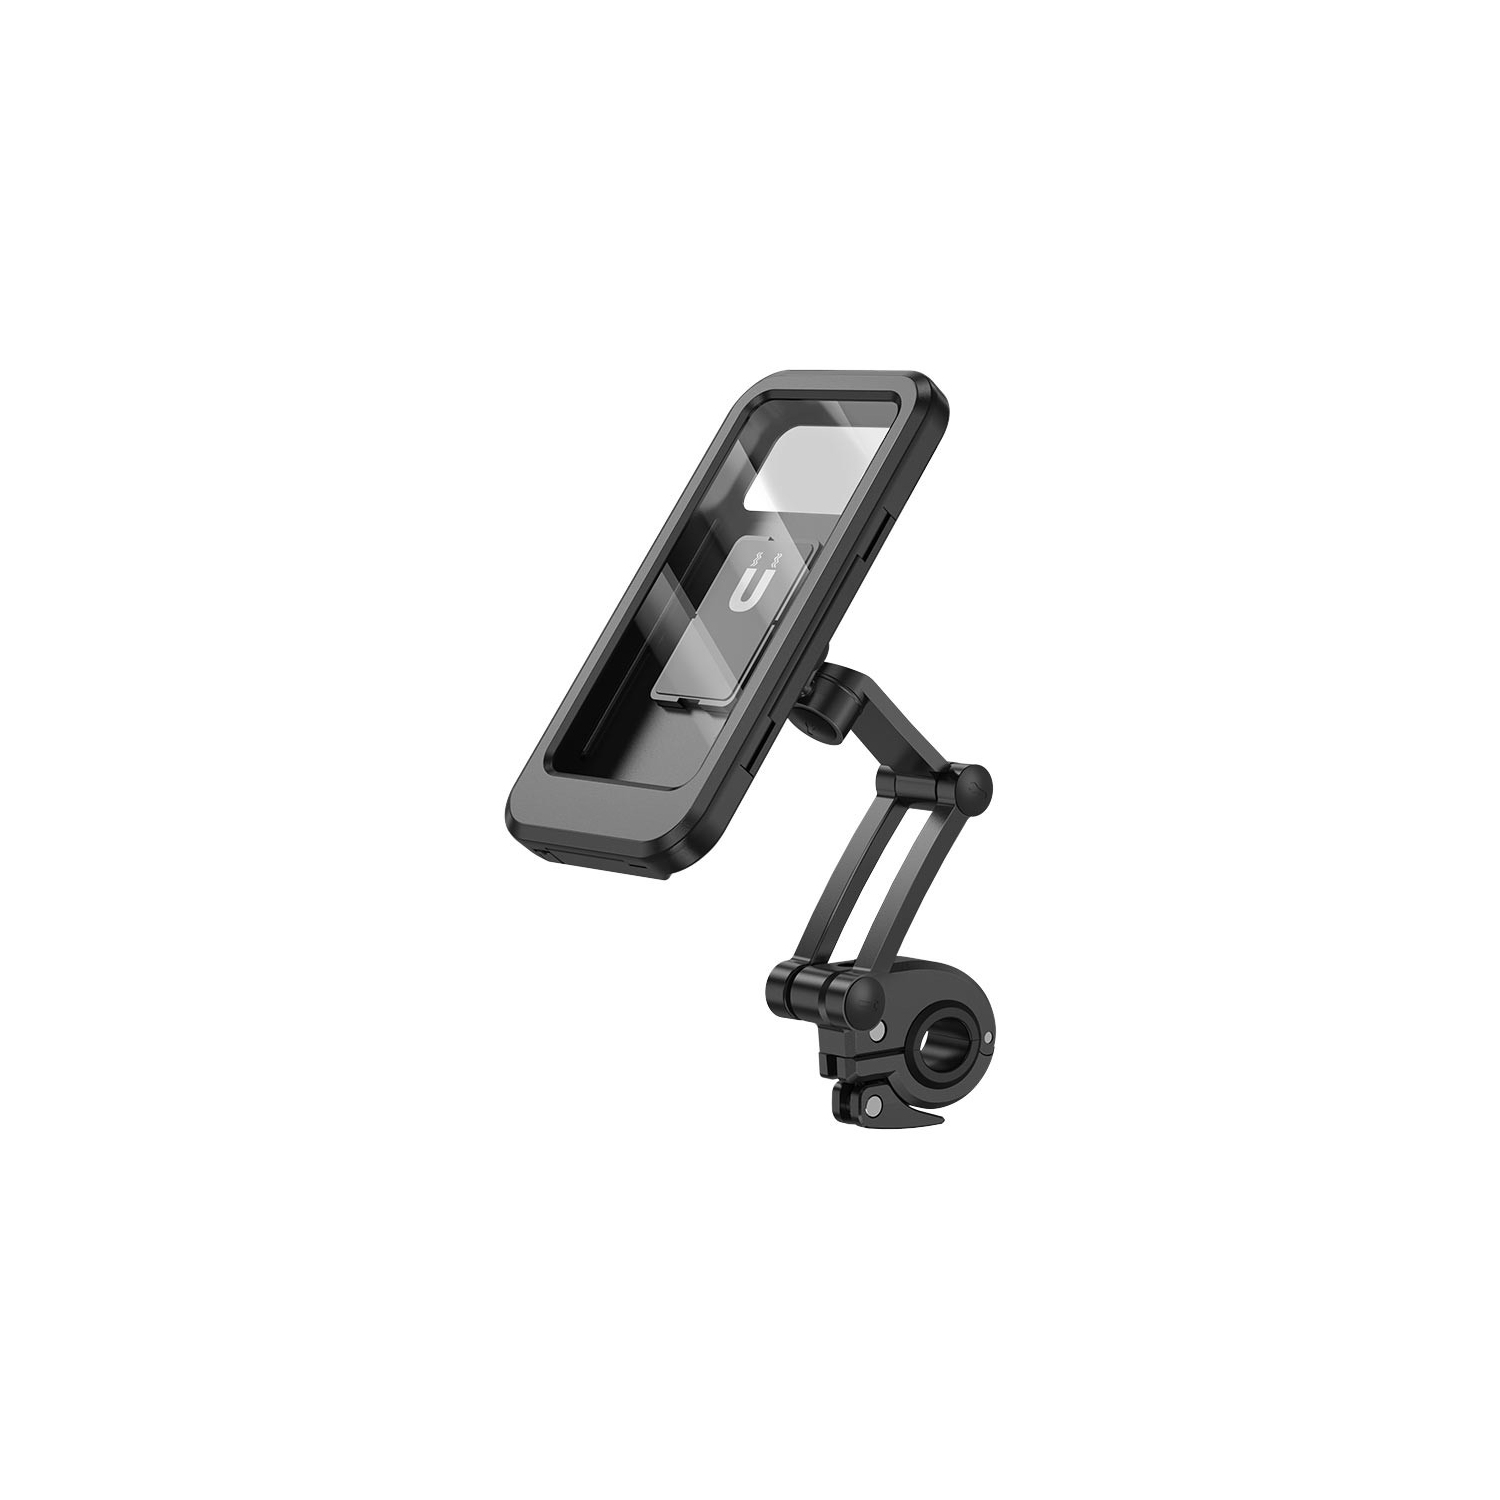 Universal Waterproof Cell Phone Holder Mount for Bicycle Bike / Motorcycle / Stroller, 360 Rotatable Hands Free Adjustable Handlebar